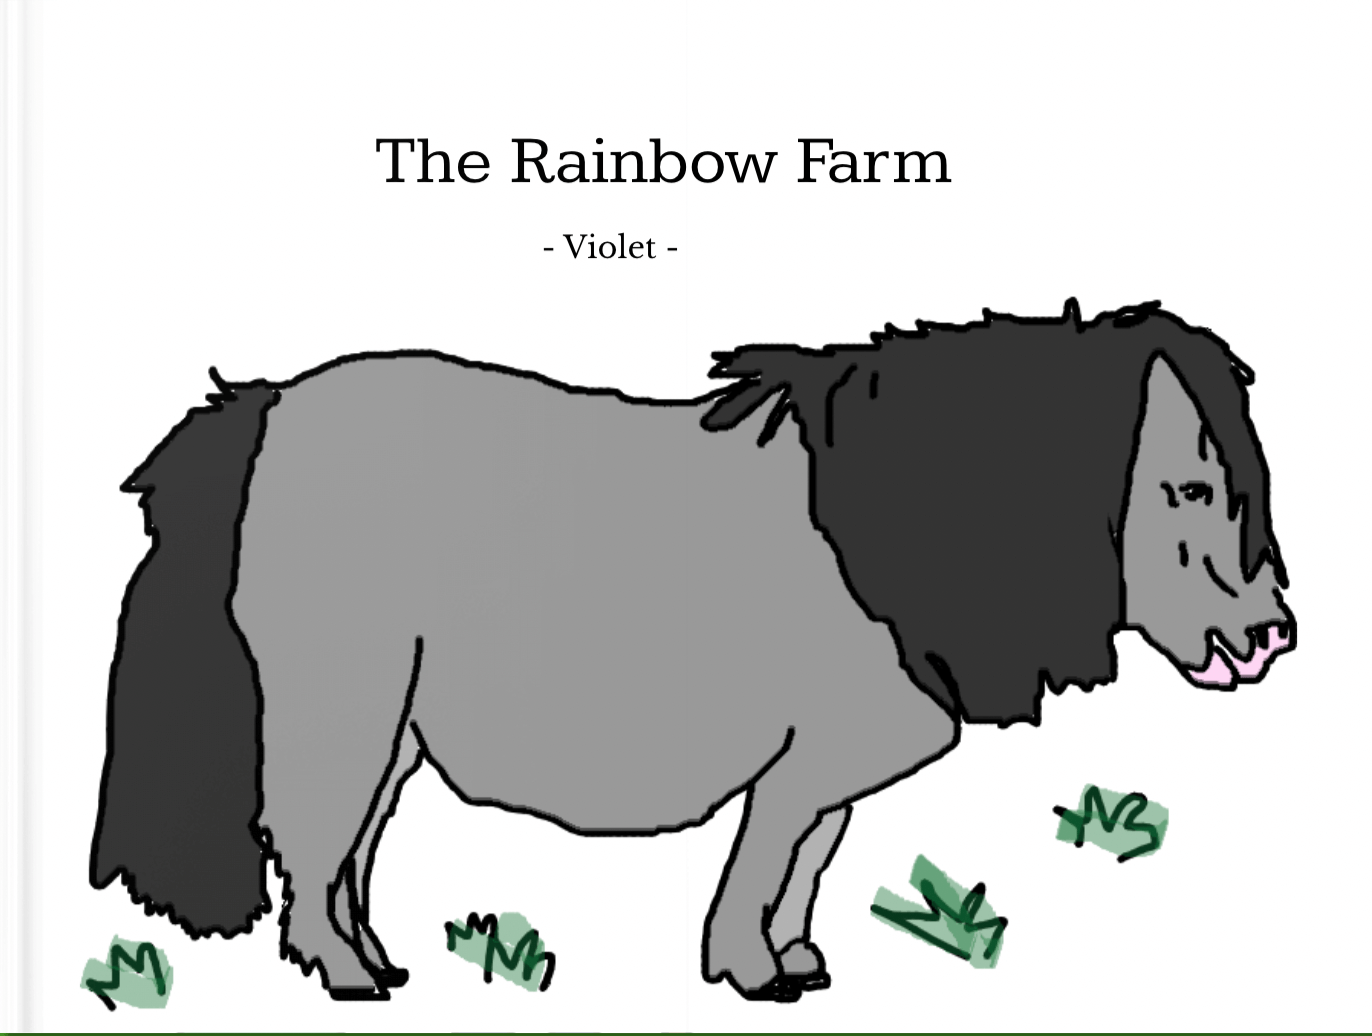 The Rainbow Farm by Violet